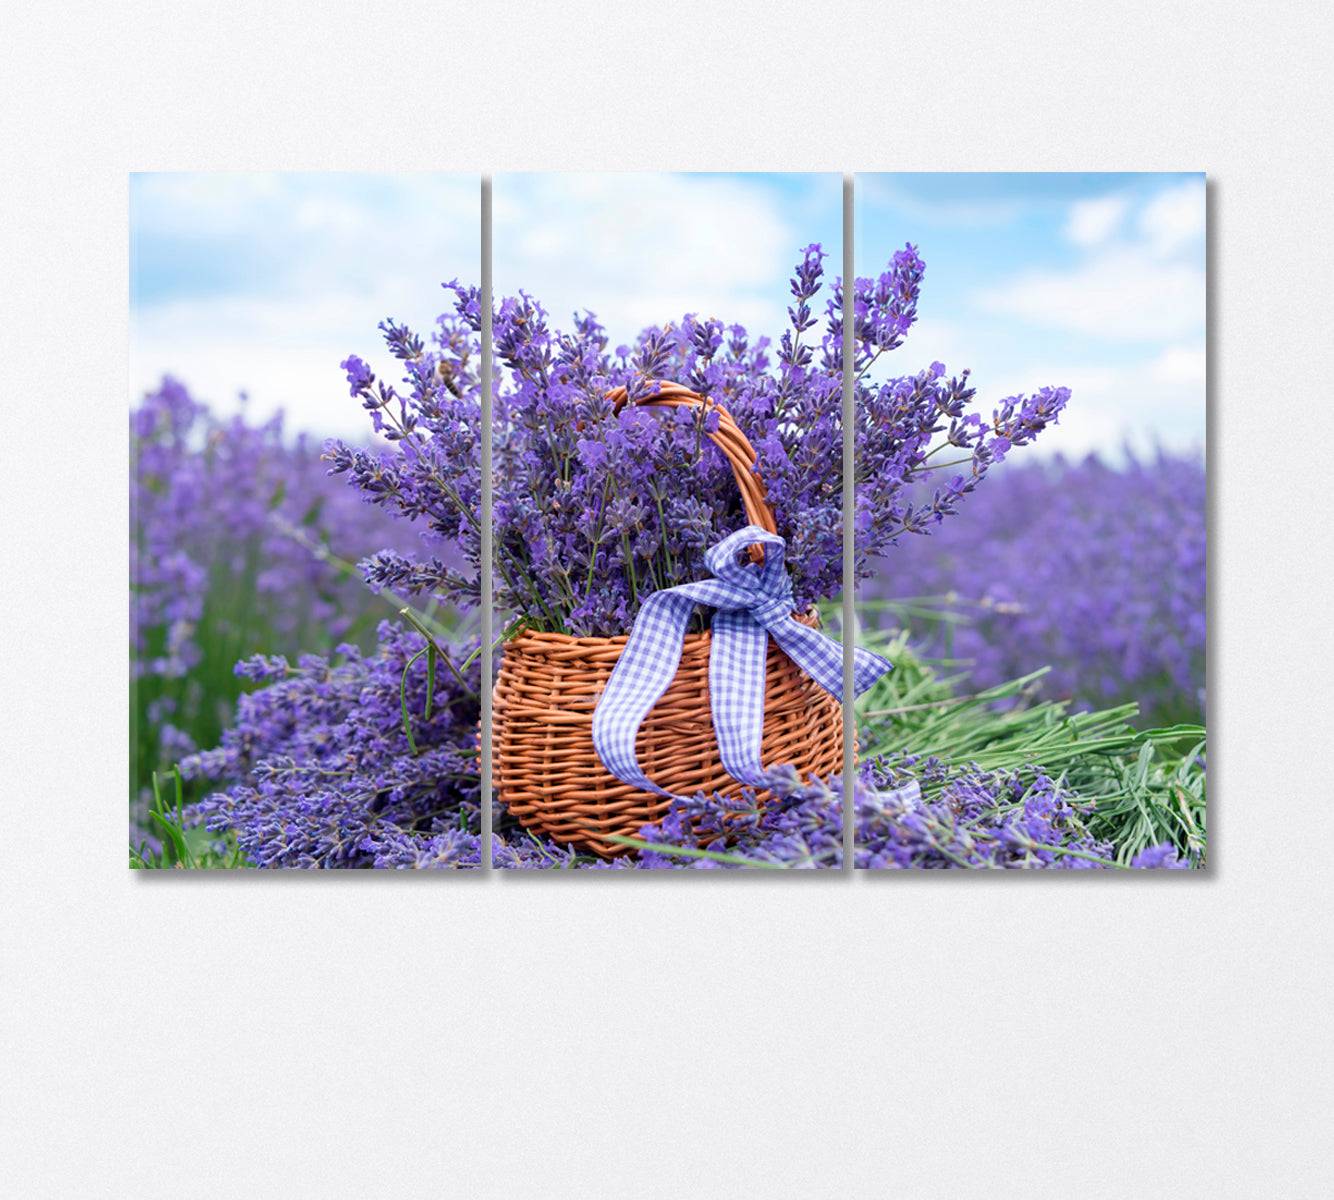 Lavender Bouquet in Wicker Basket Canvas Print-Canvas Print-CetArt-3 Panels-36x24 inches-CetArt